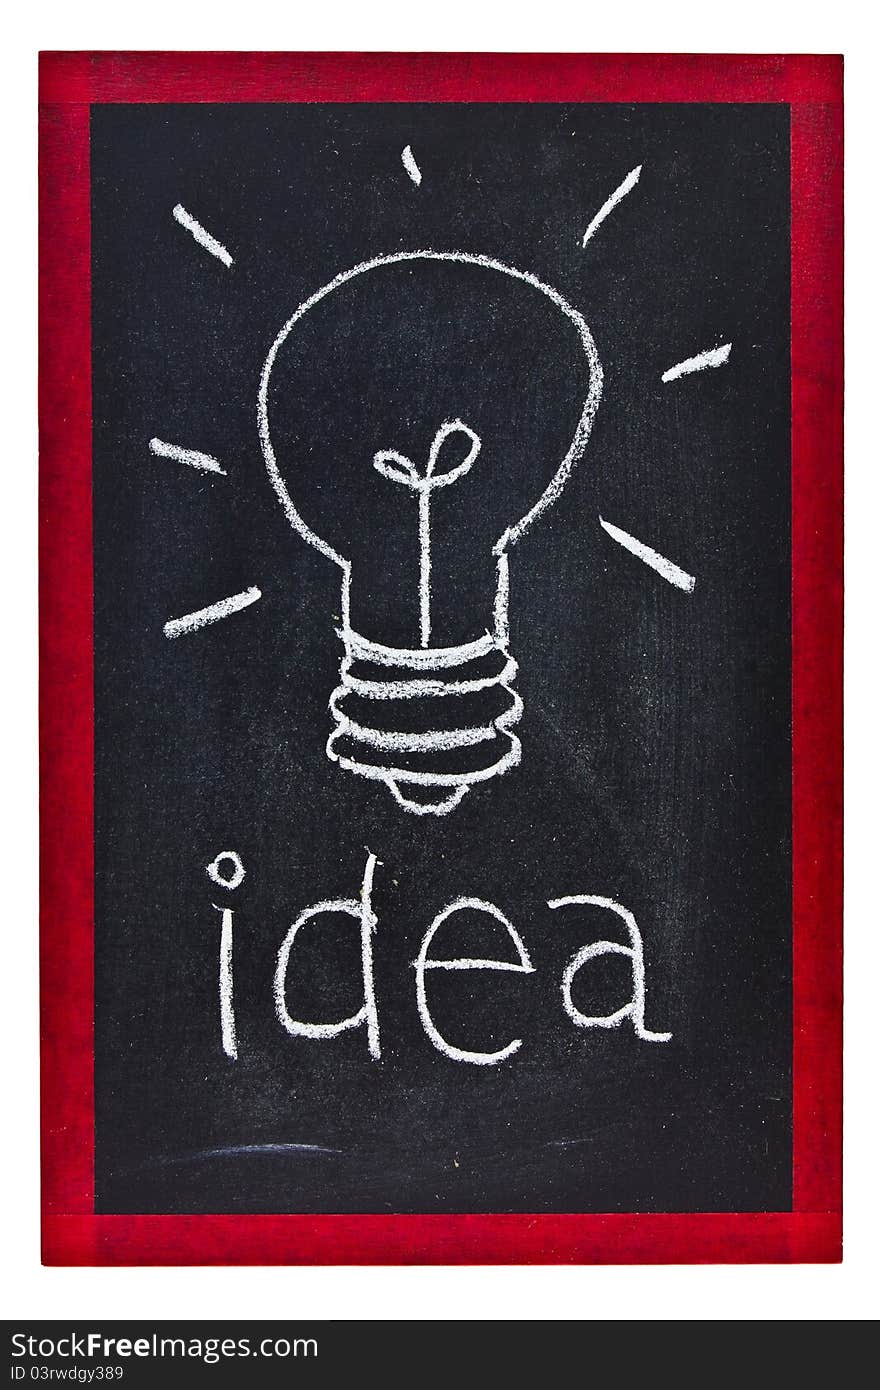 Bulb and idea written on blackboard. Bulb and idea written on blackboard